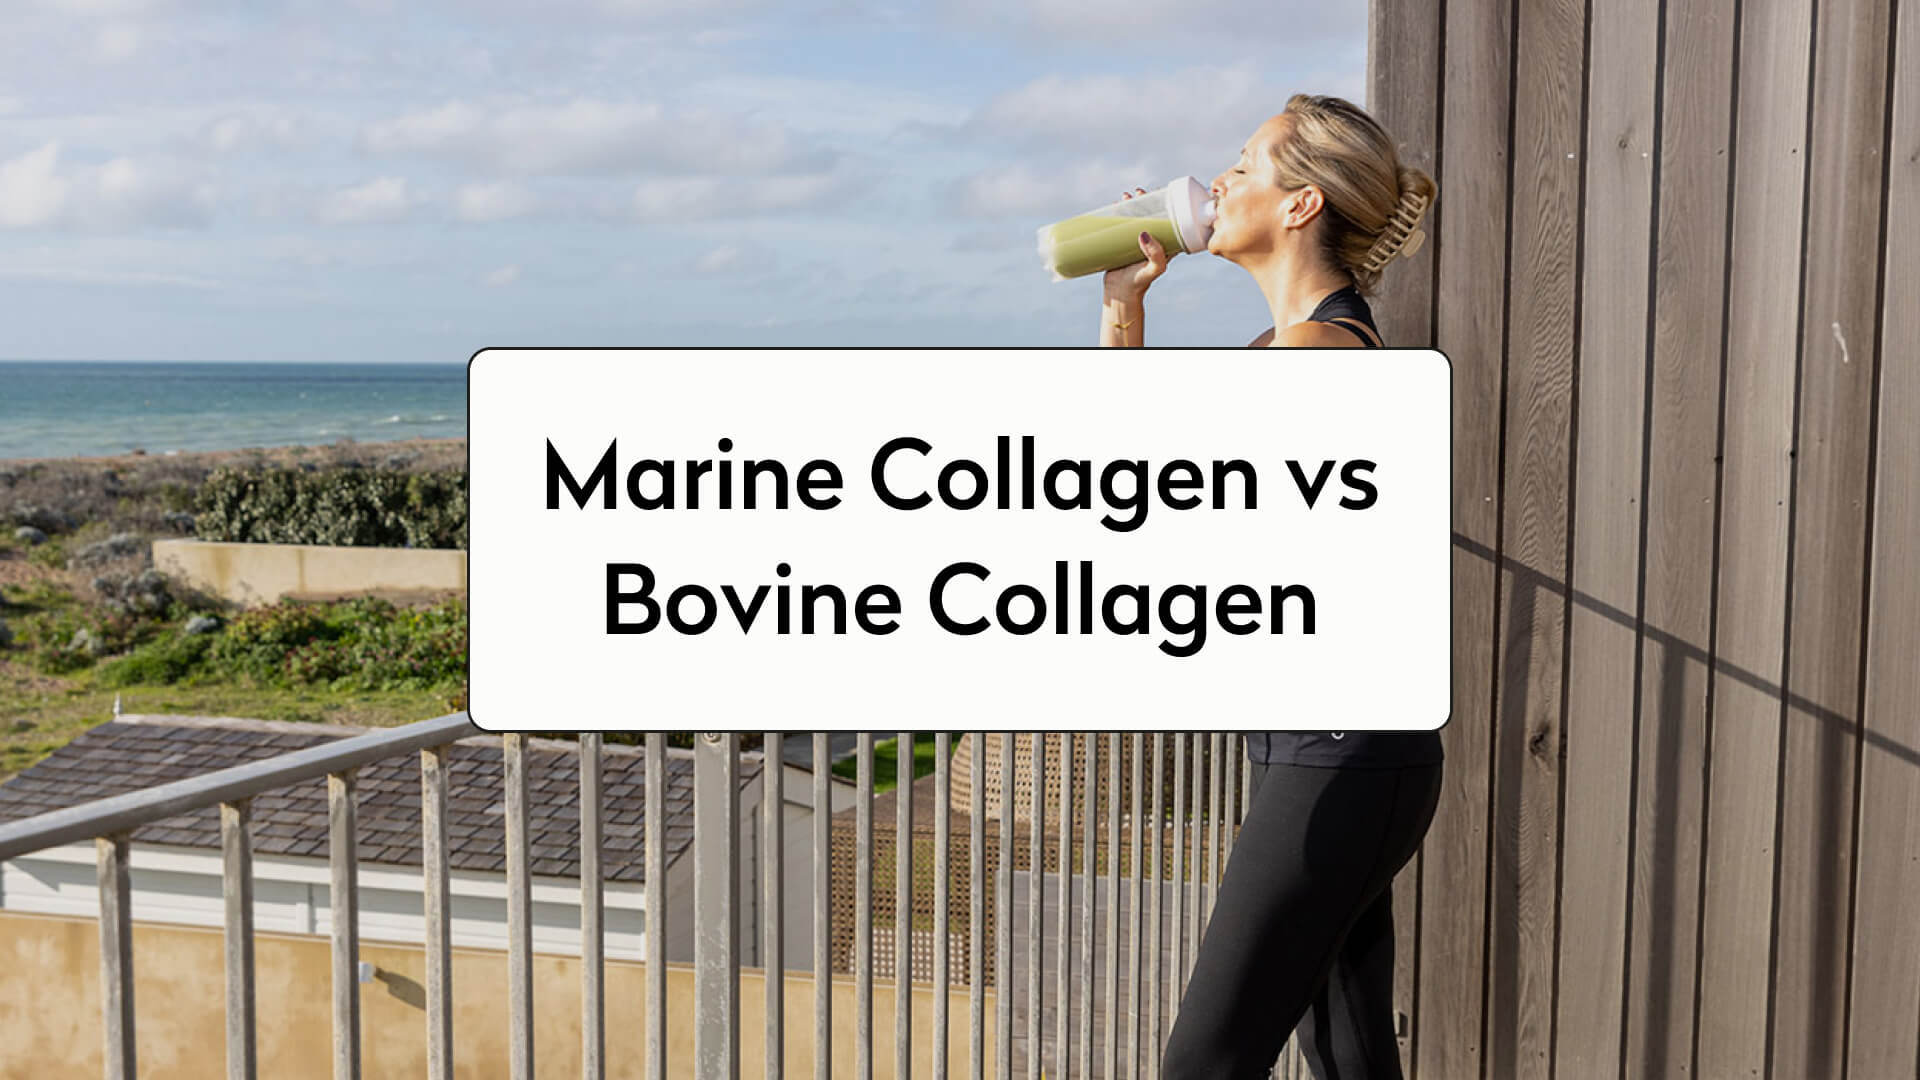 Marine Collagen vs Bovine Collagen - Similarities & Differences